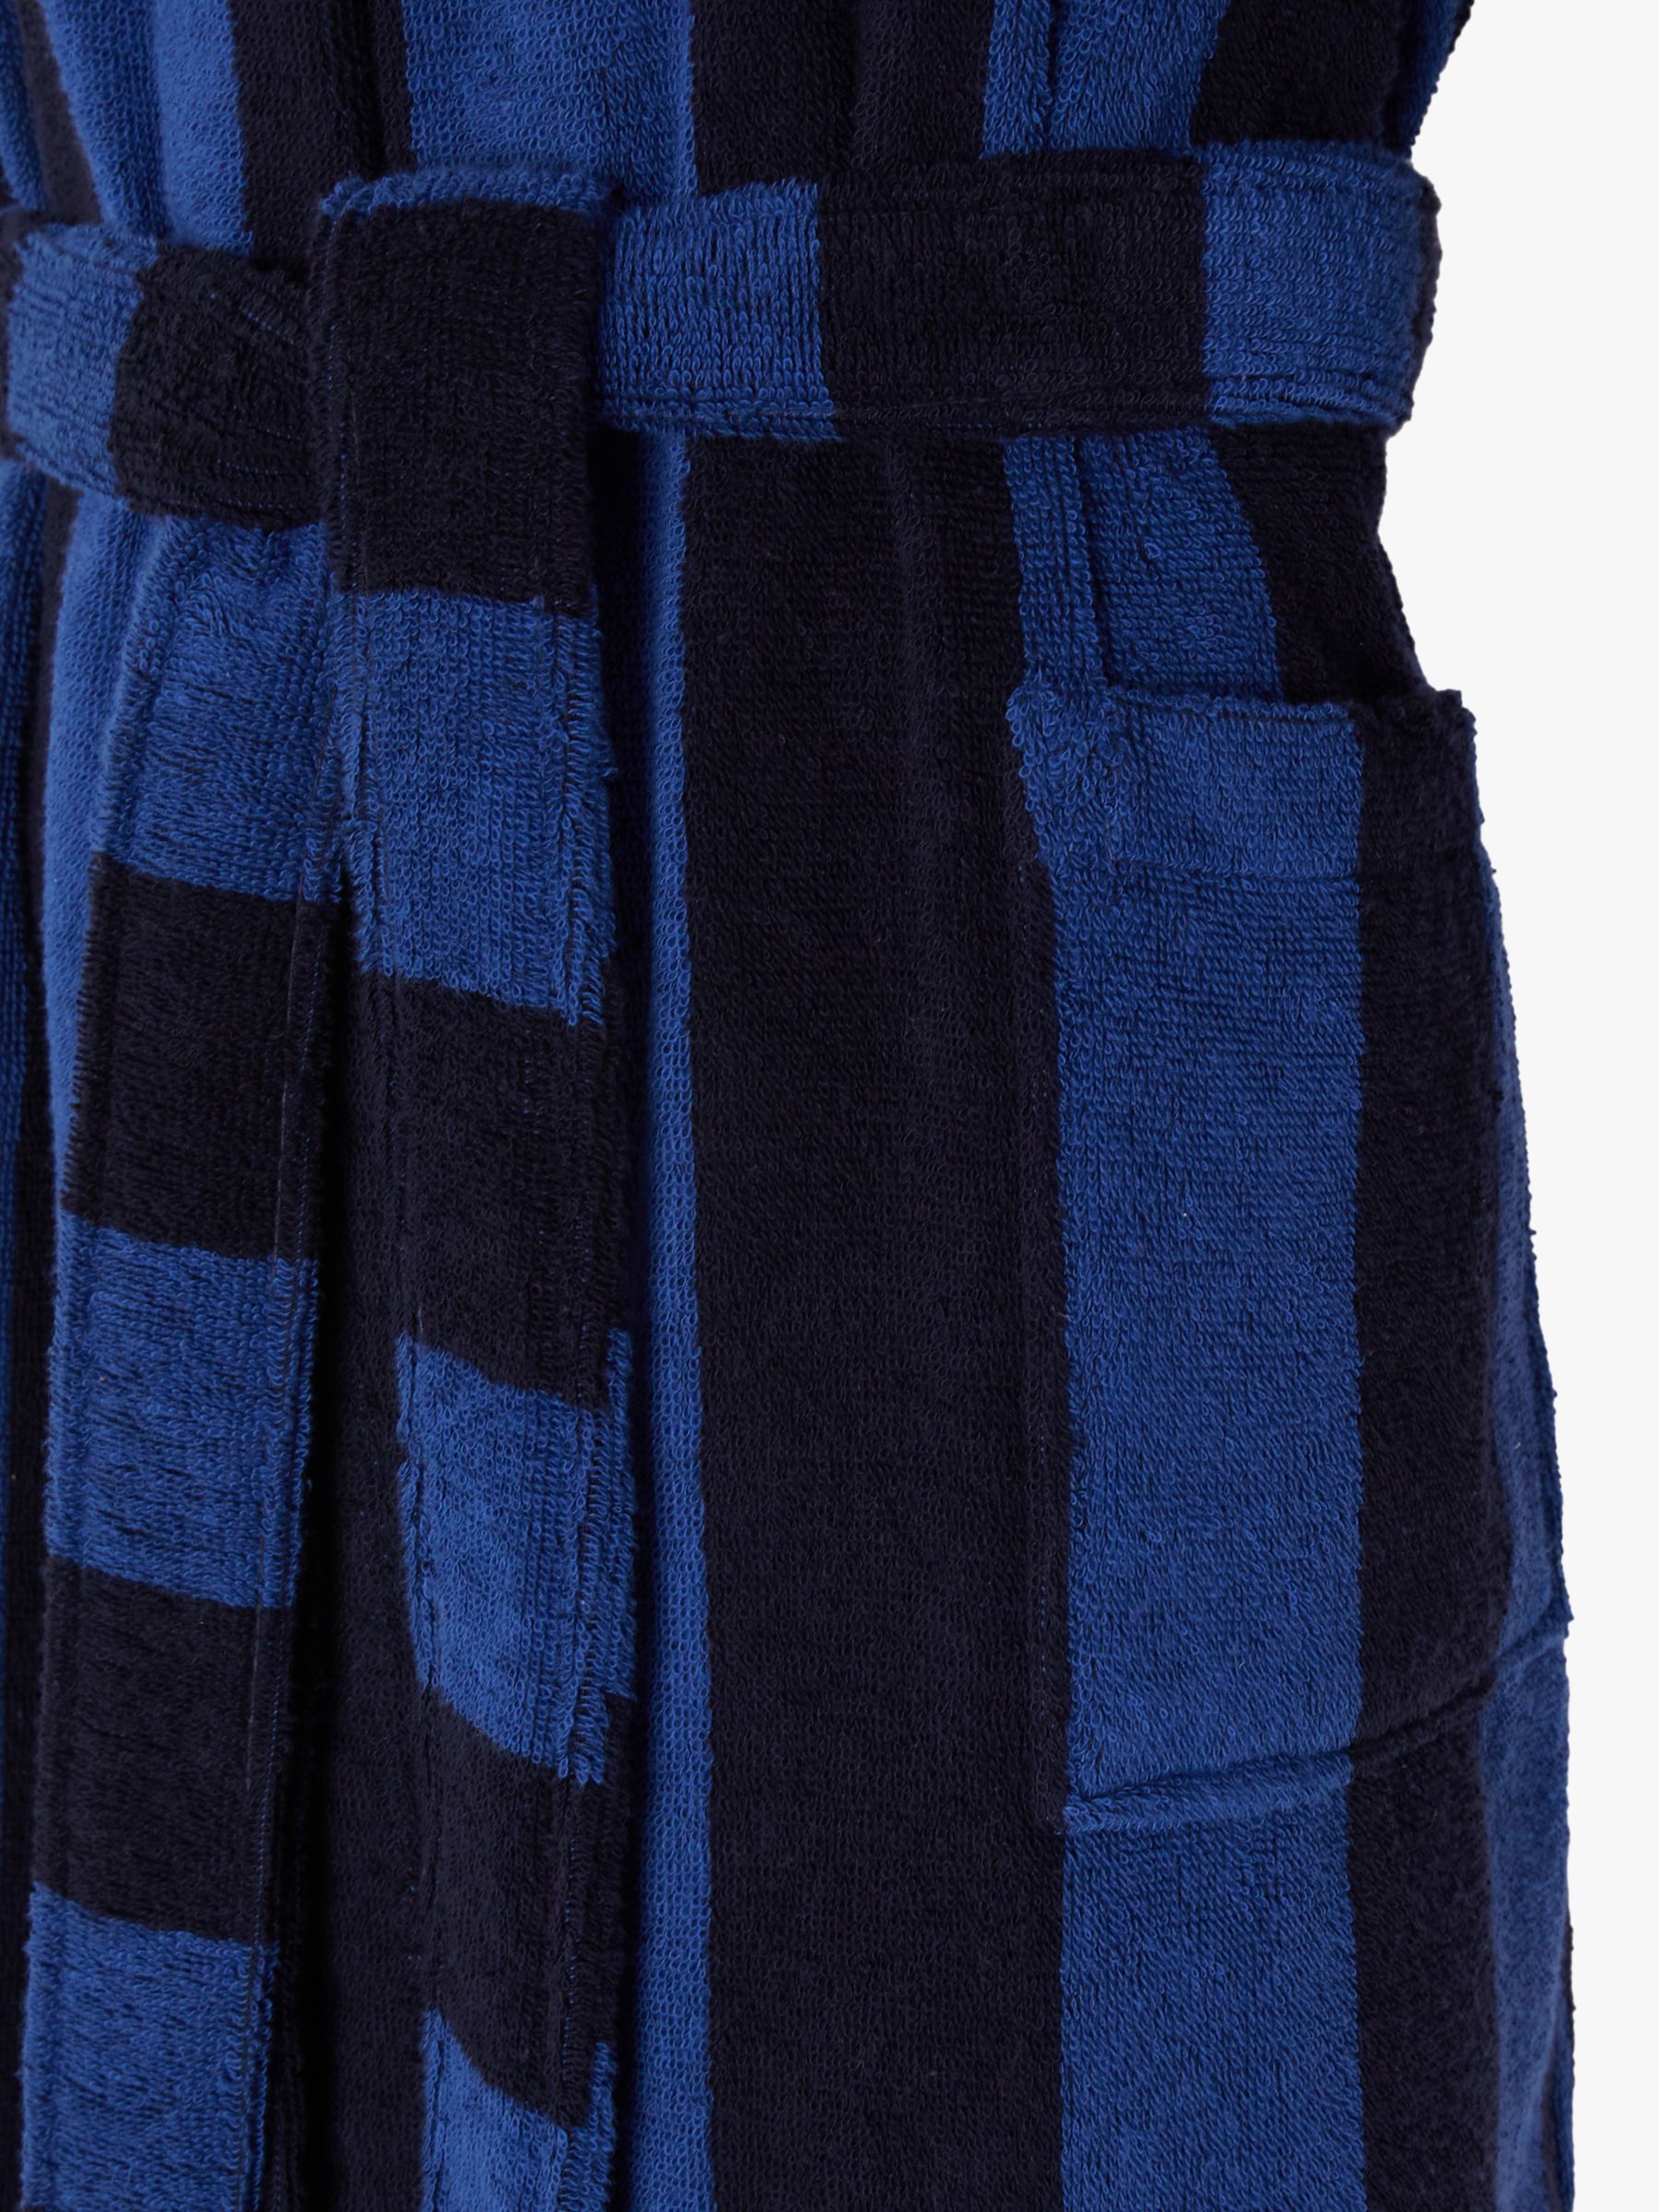 Jasper Conran London Unisex Soft Lightweight Dressing Gown, Navy/True Blue, XS